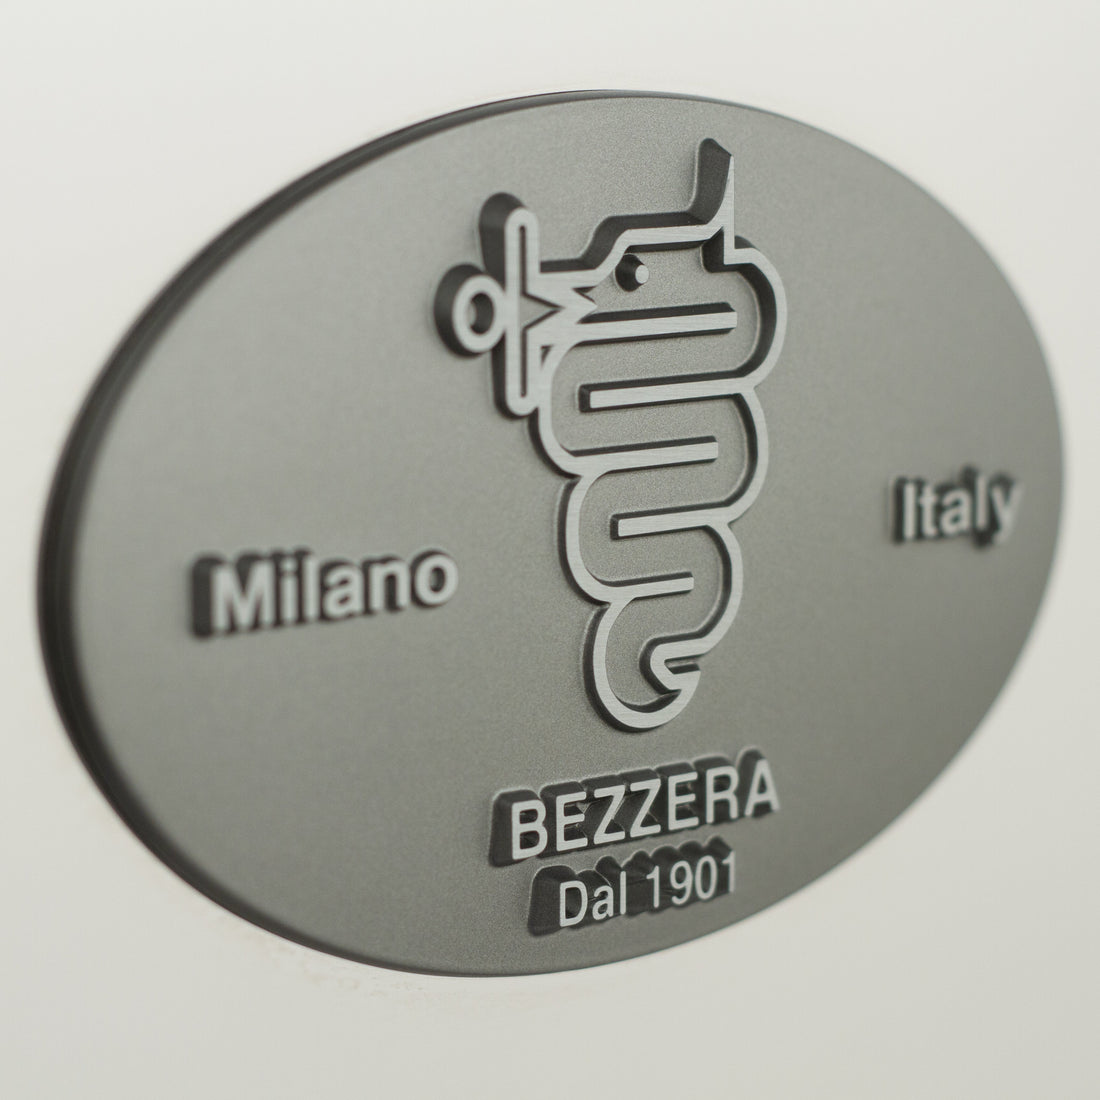 Bezzera logo badge on the back panel.